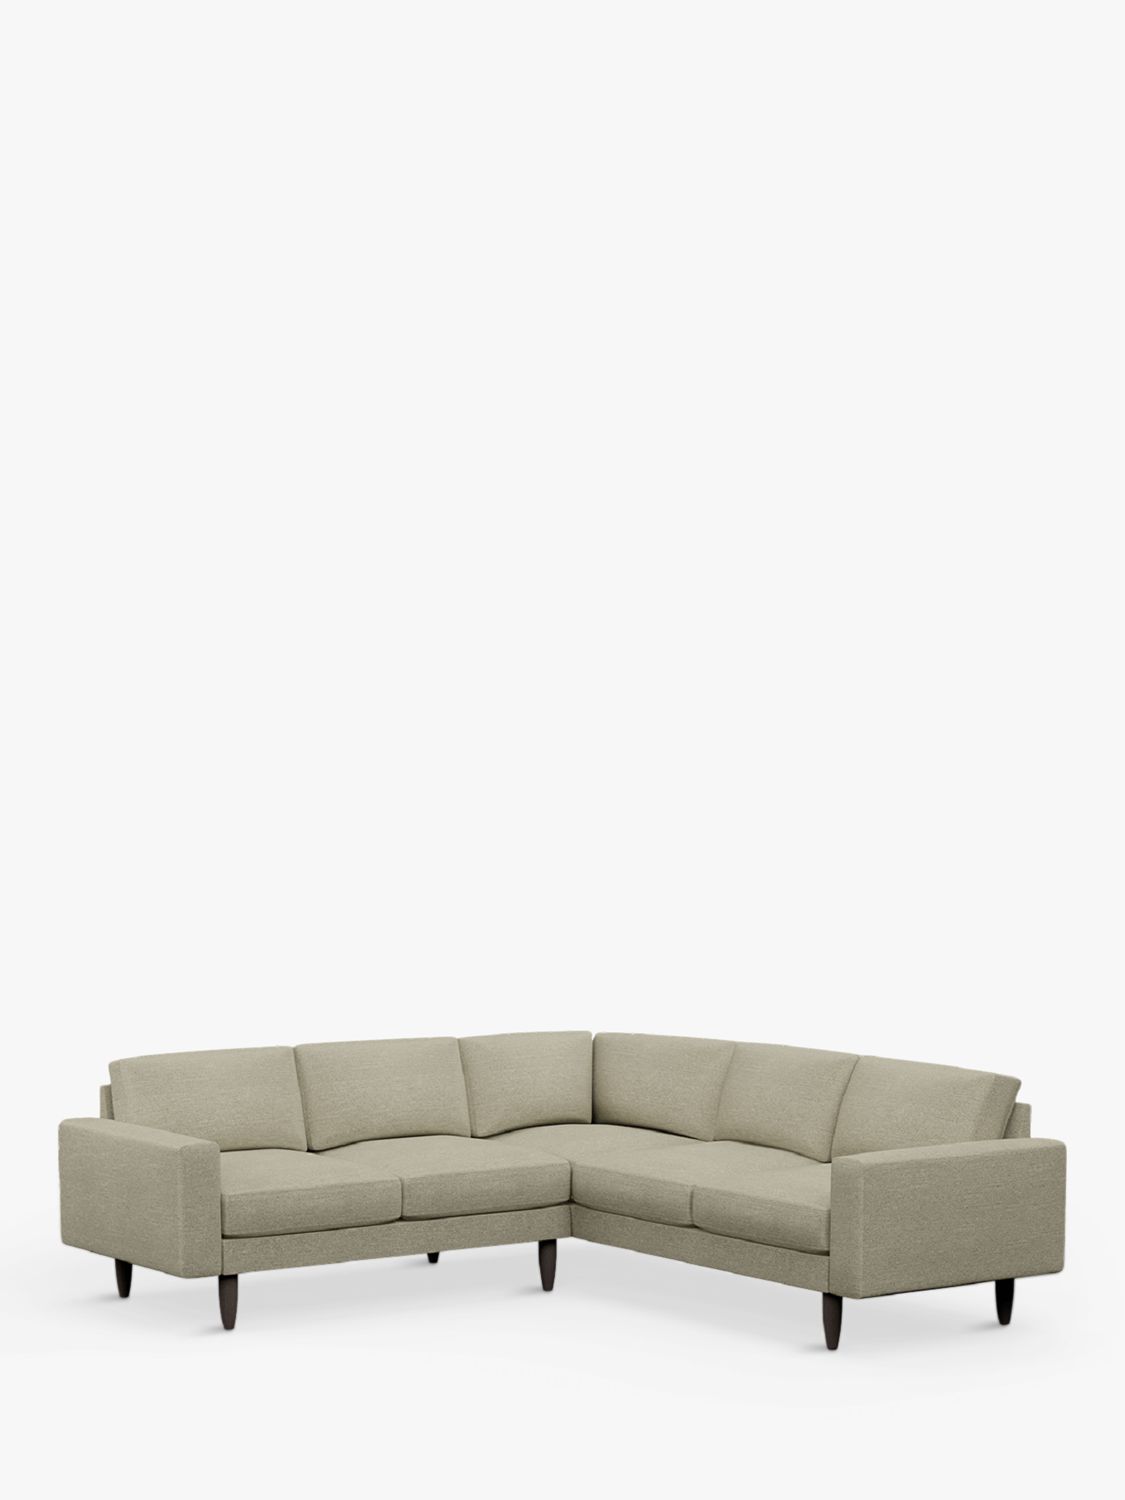 Rise Range, Hutch Rise Block Arm 5 Seater Plus Corner Sofa, Dark Leg, Textured Weave Oatmeal